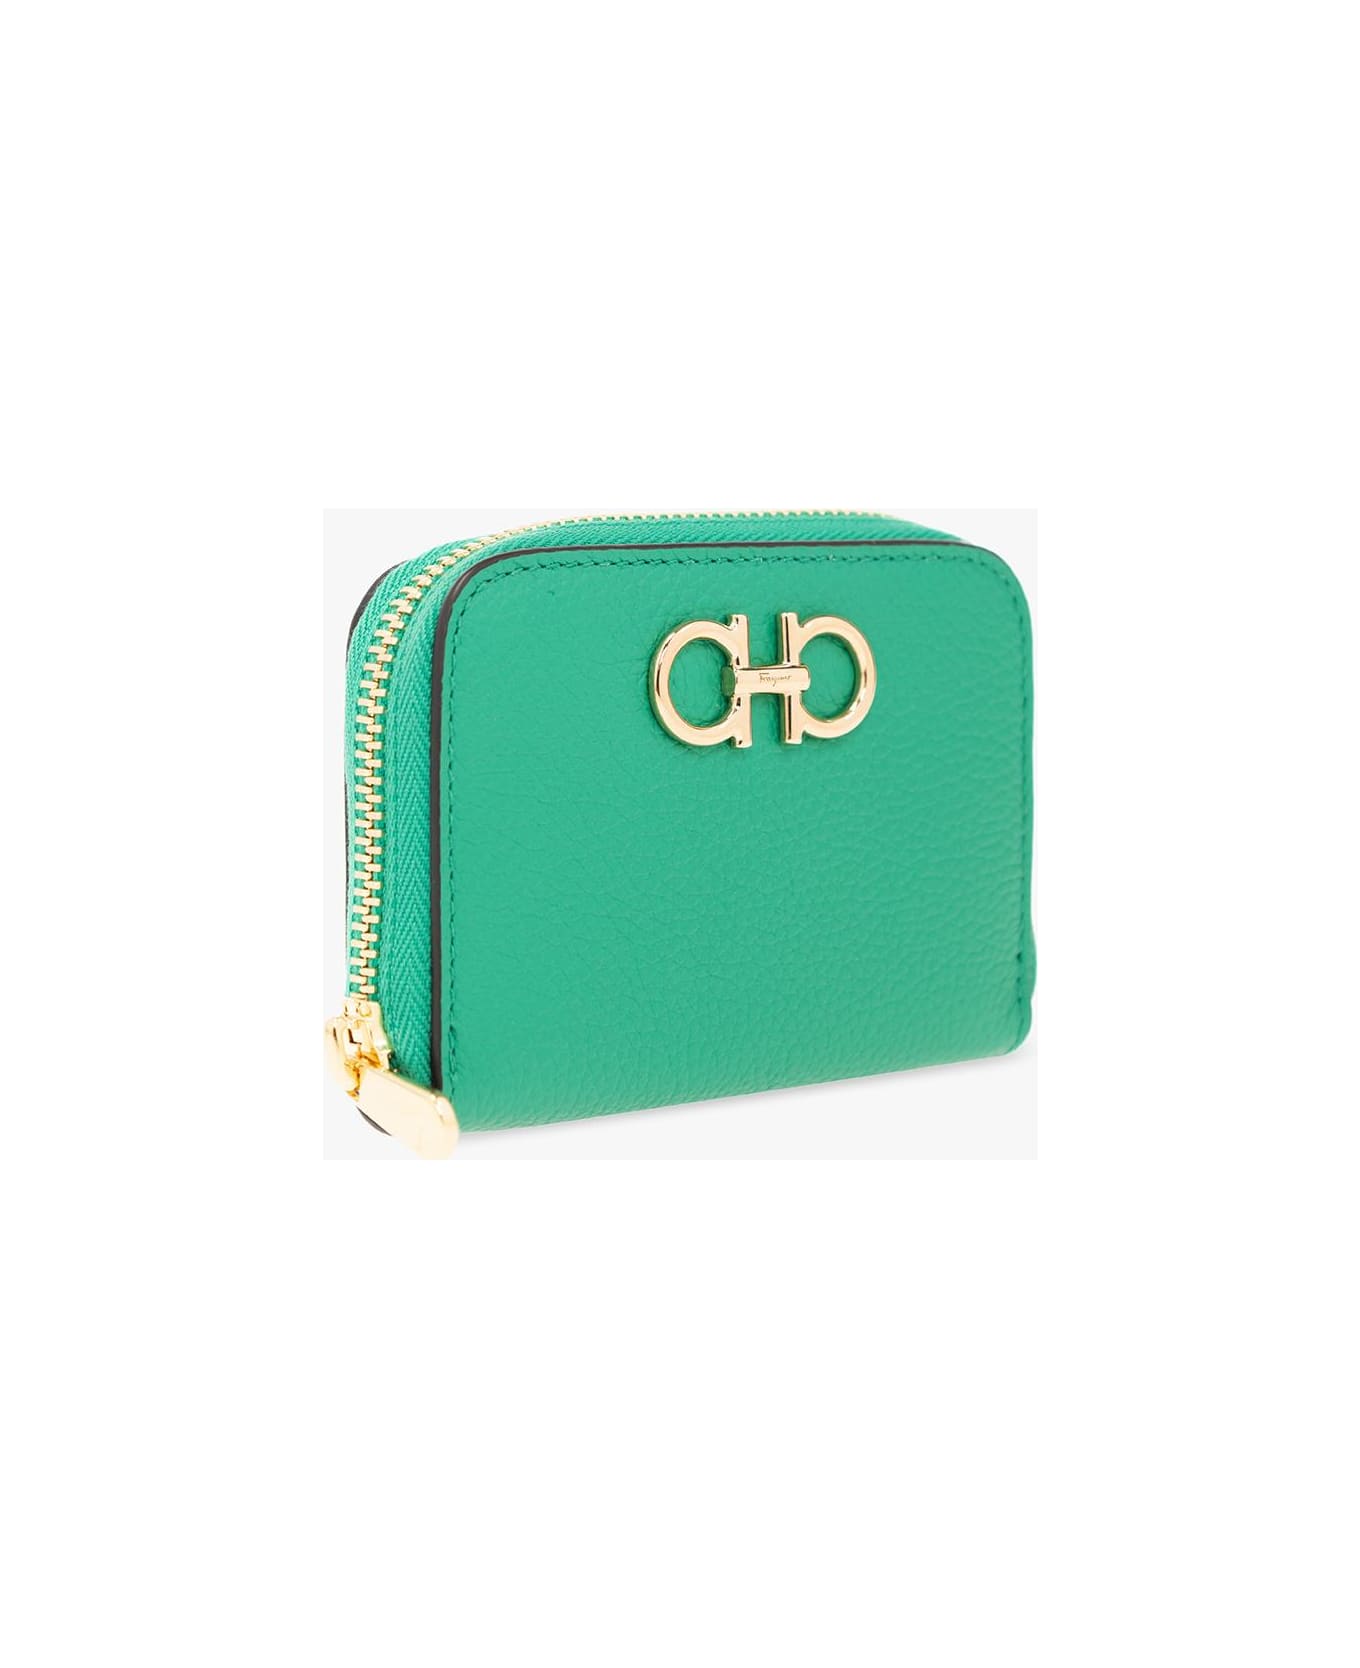 Ferragamo Leather Wallet With Logo - Green 財布